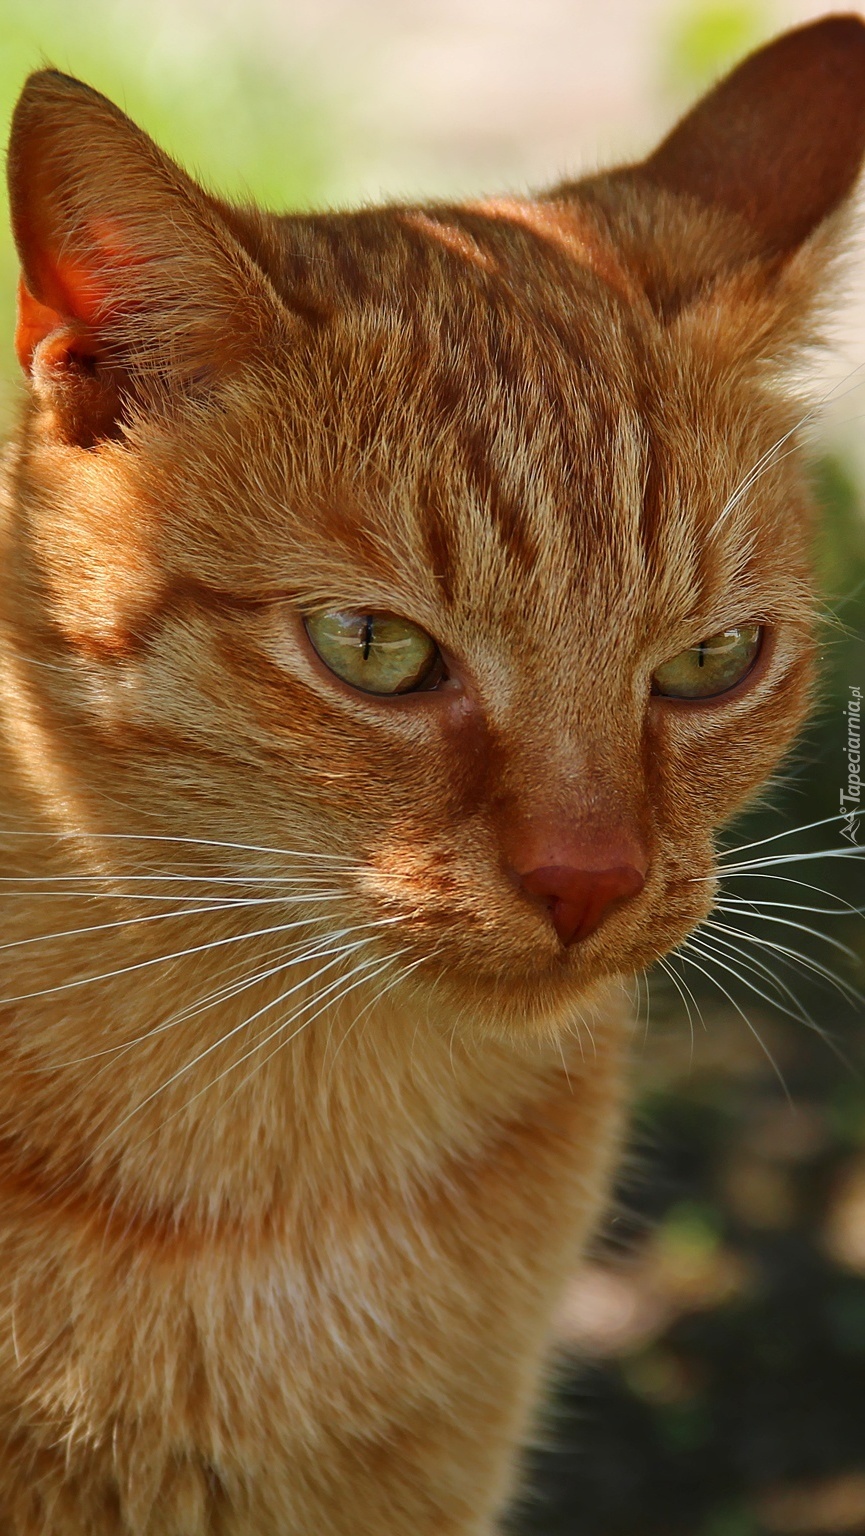 Wąsy rudego kota